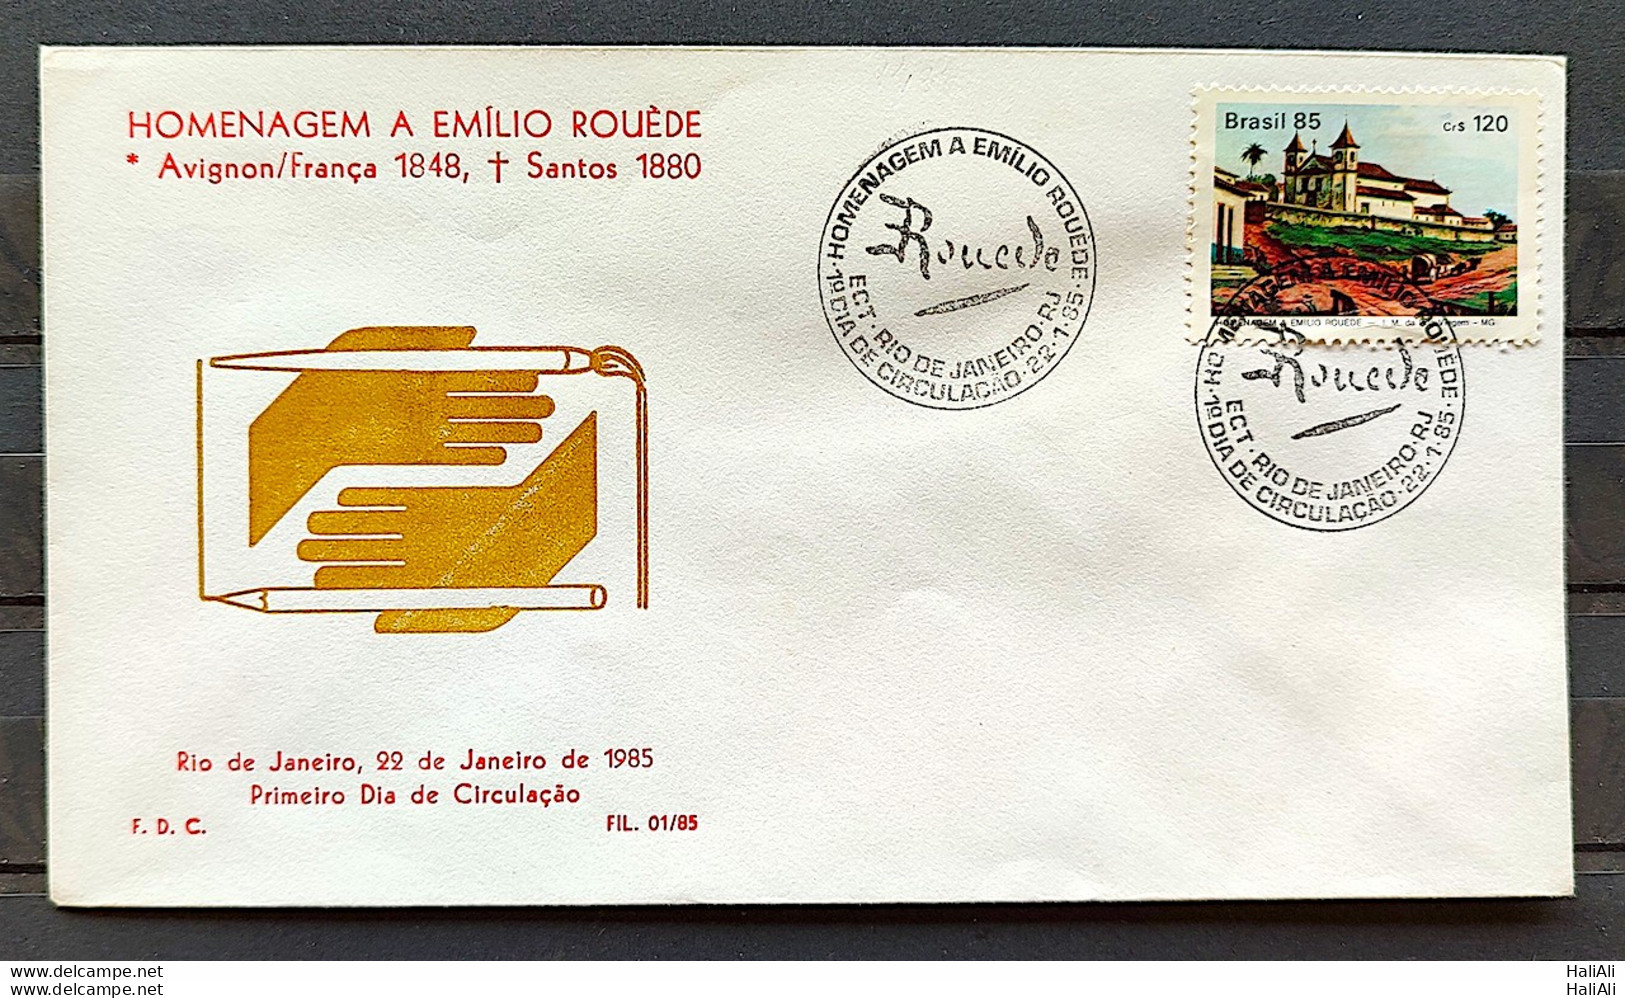 Brazil Envelope PVT FIL 001 1985 Emilio Rouede Church CBC RJ - FDC